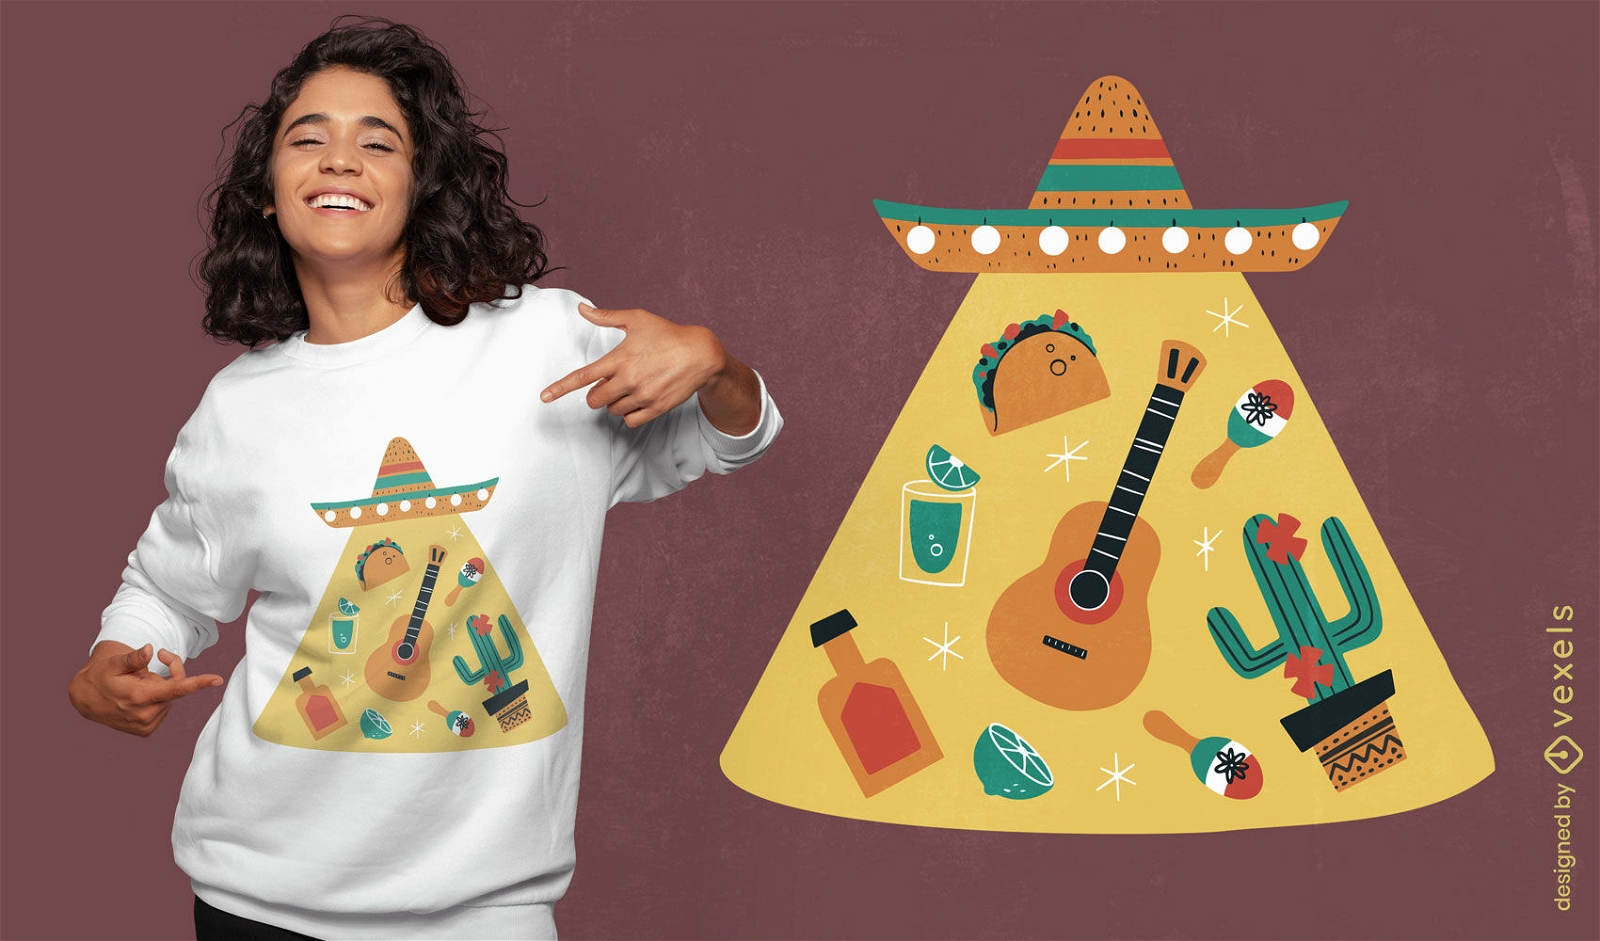 Dise?o de camiseta de elementos de la cultura mexicana.